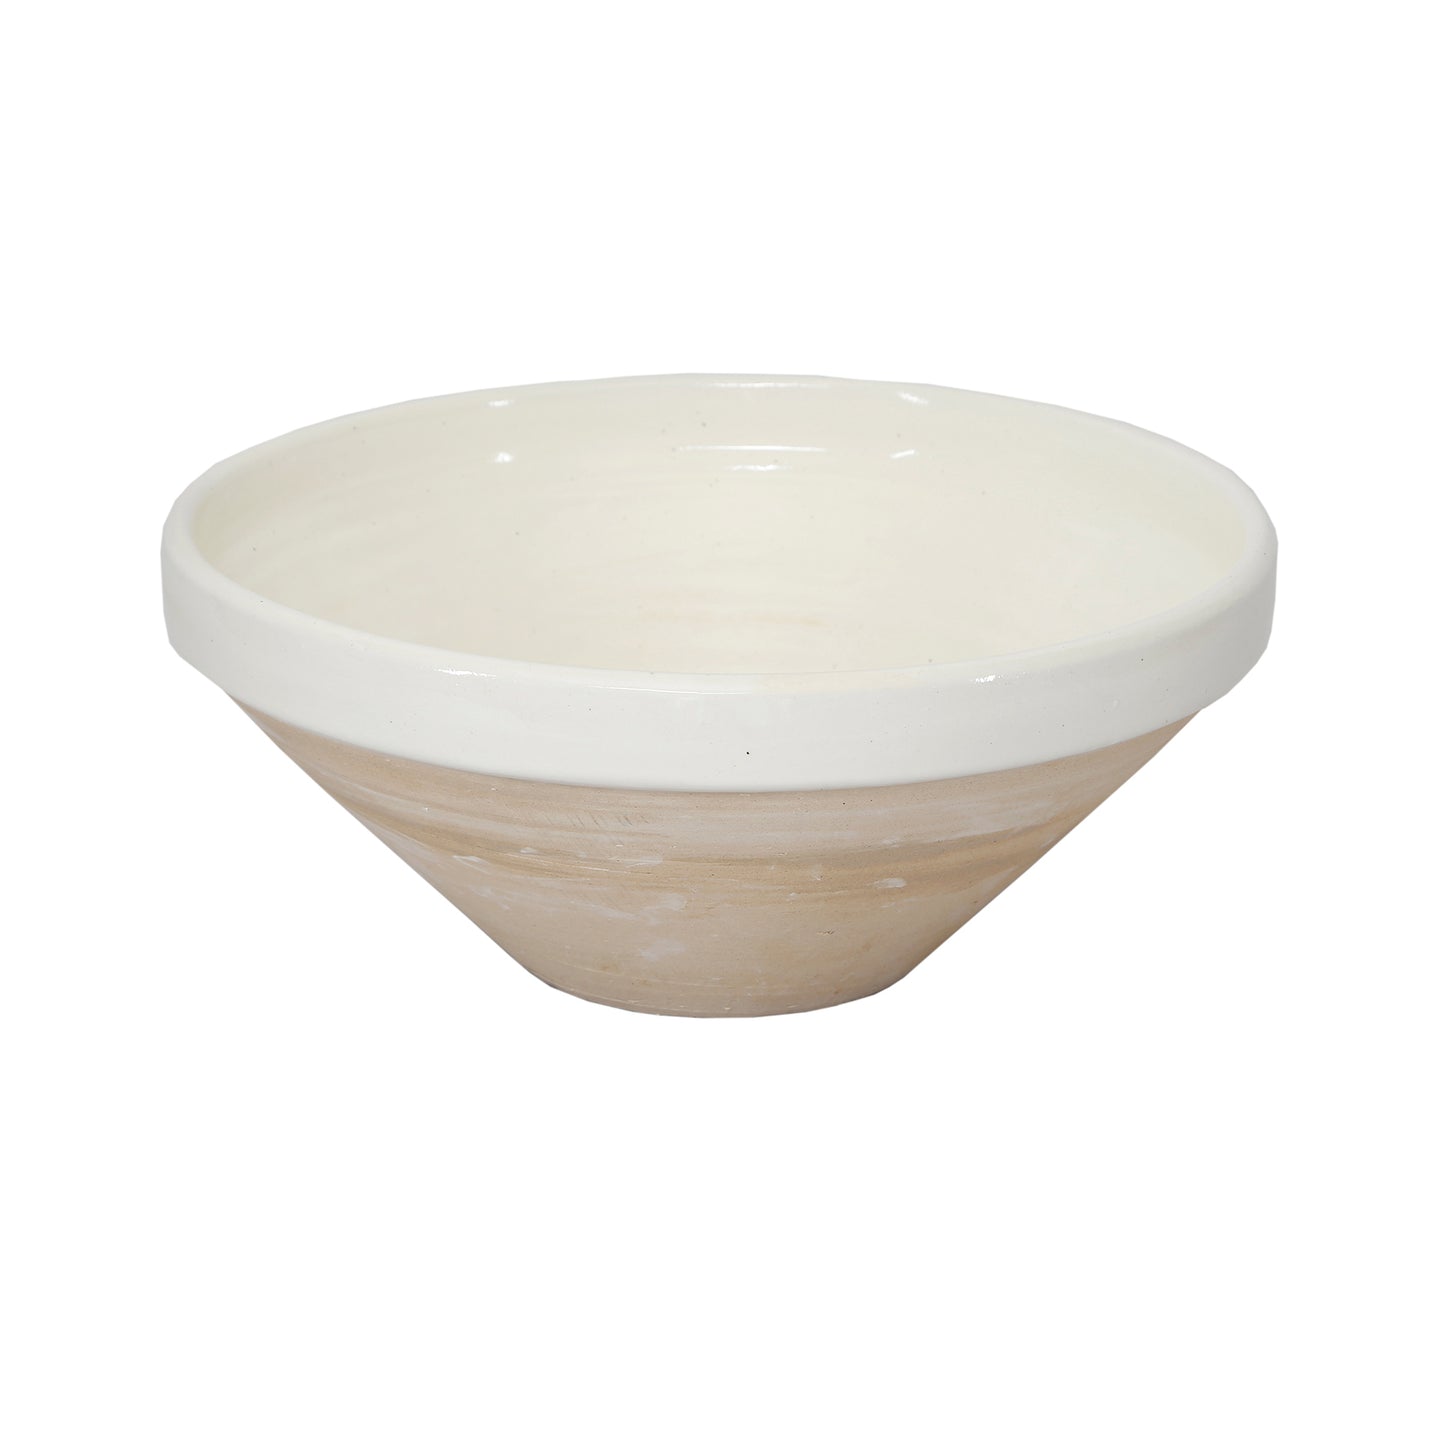 White Vintage Style Ceramic Bowl